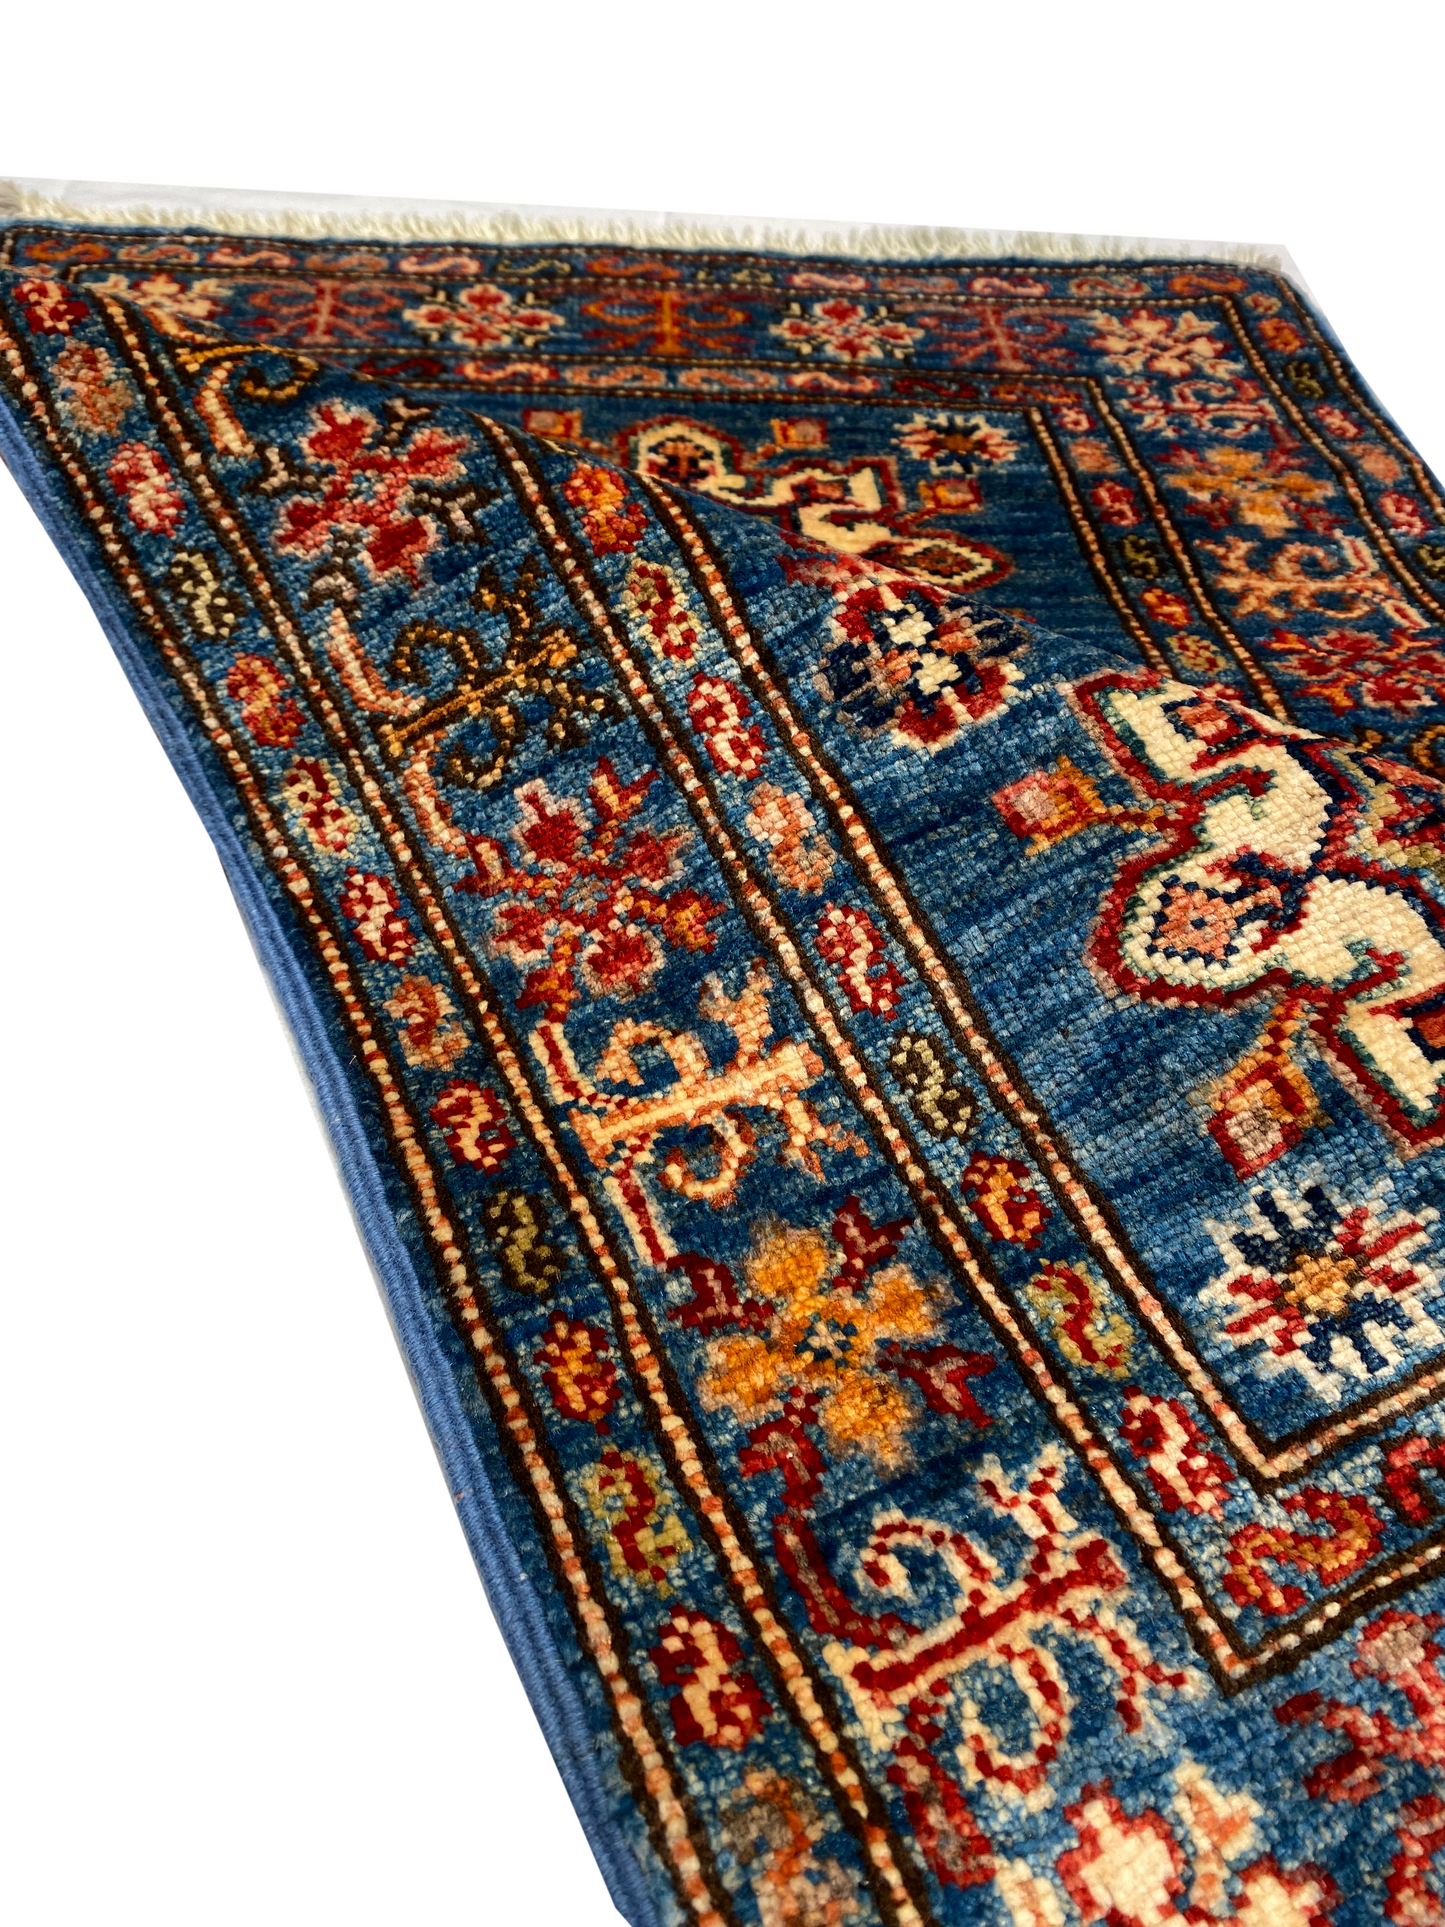 Şirvan Carpet 90 X 59 cm